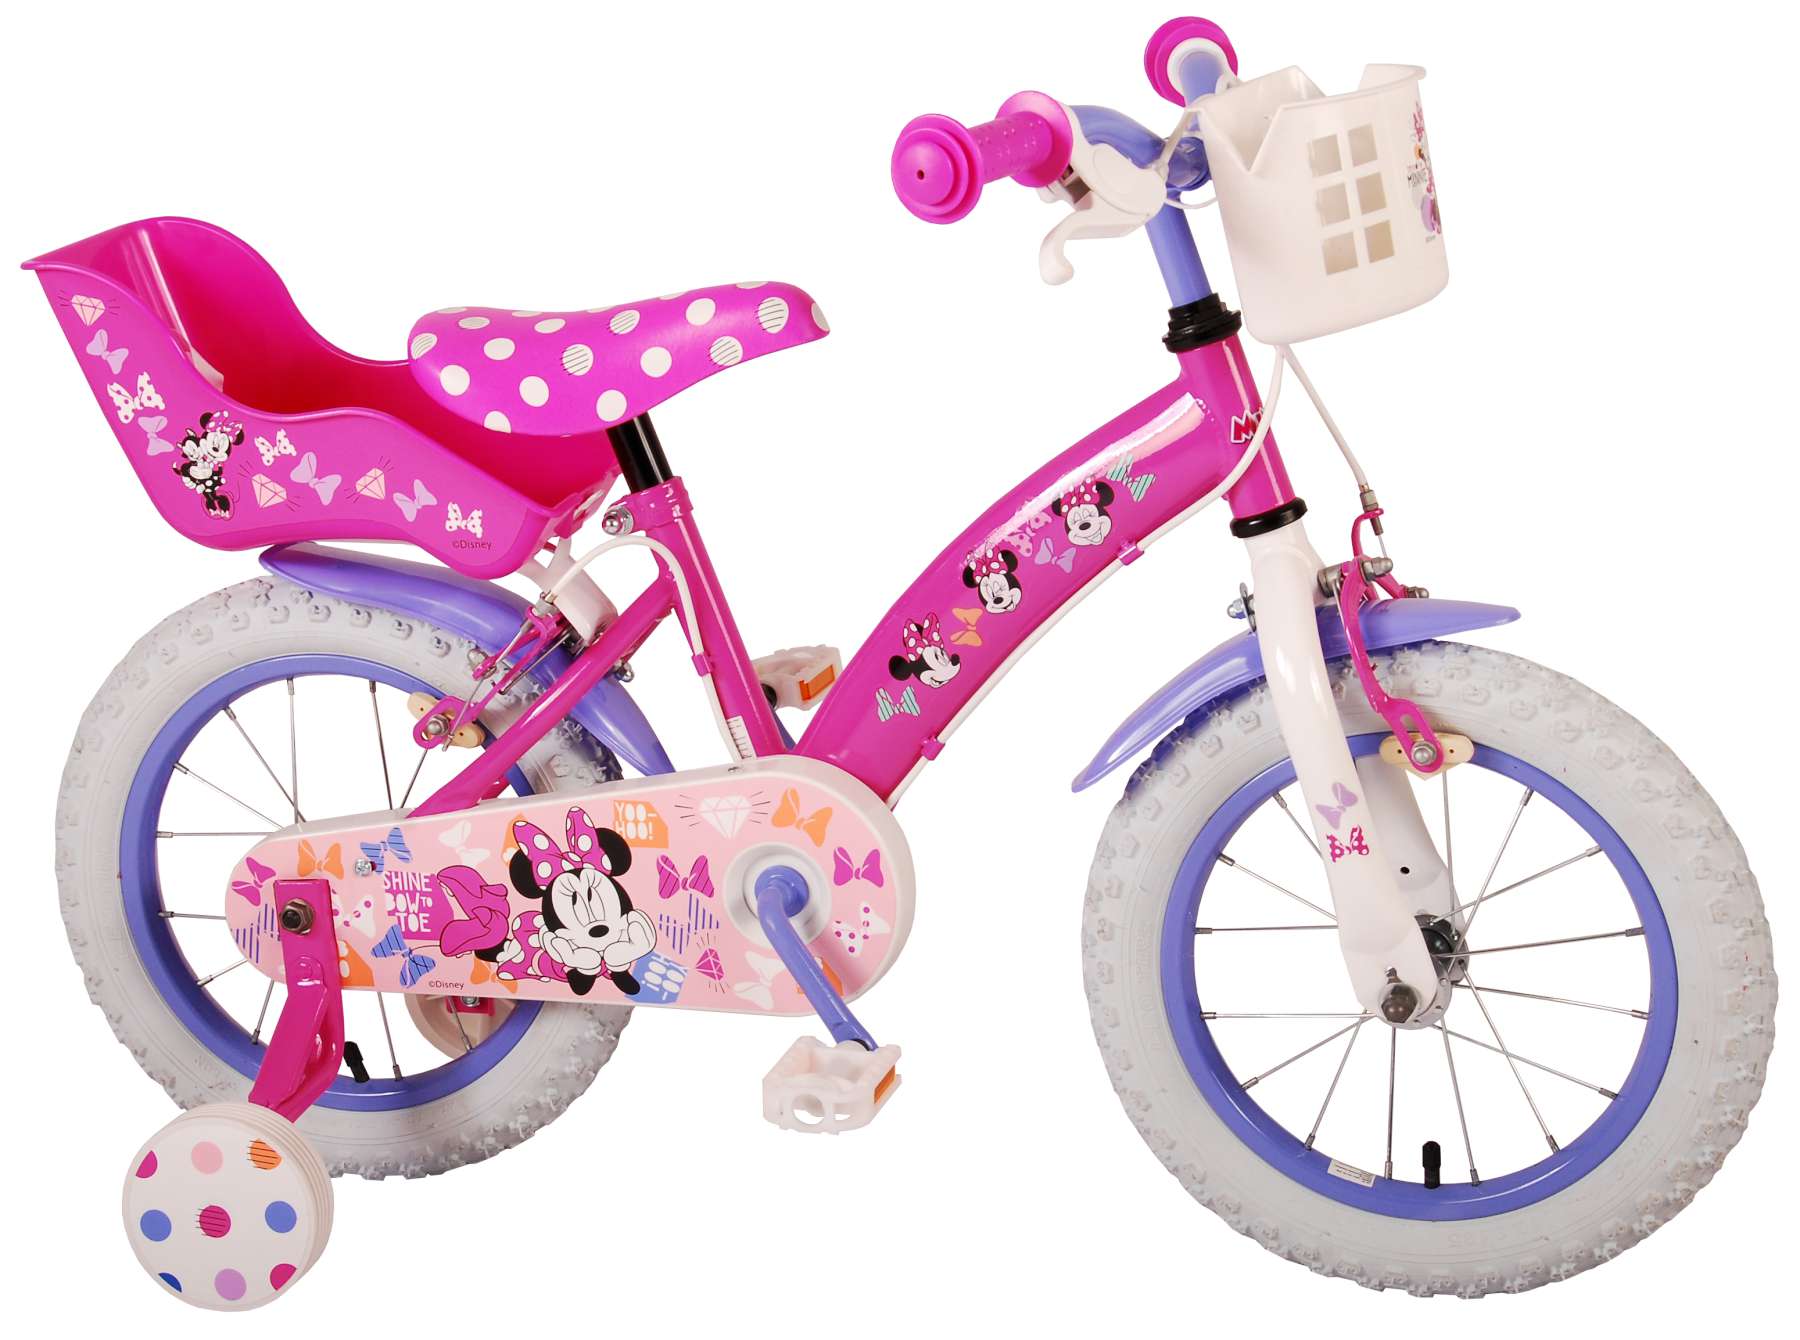 Details about   14" Nancy Girl Bicycle Kids Bike with Basket Bell Hand Brake Training Wheel Pink 